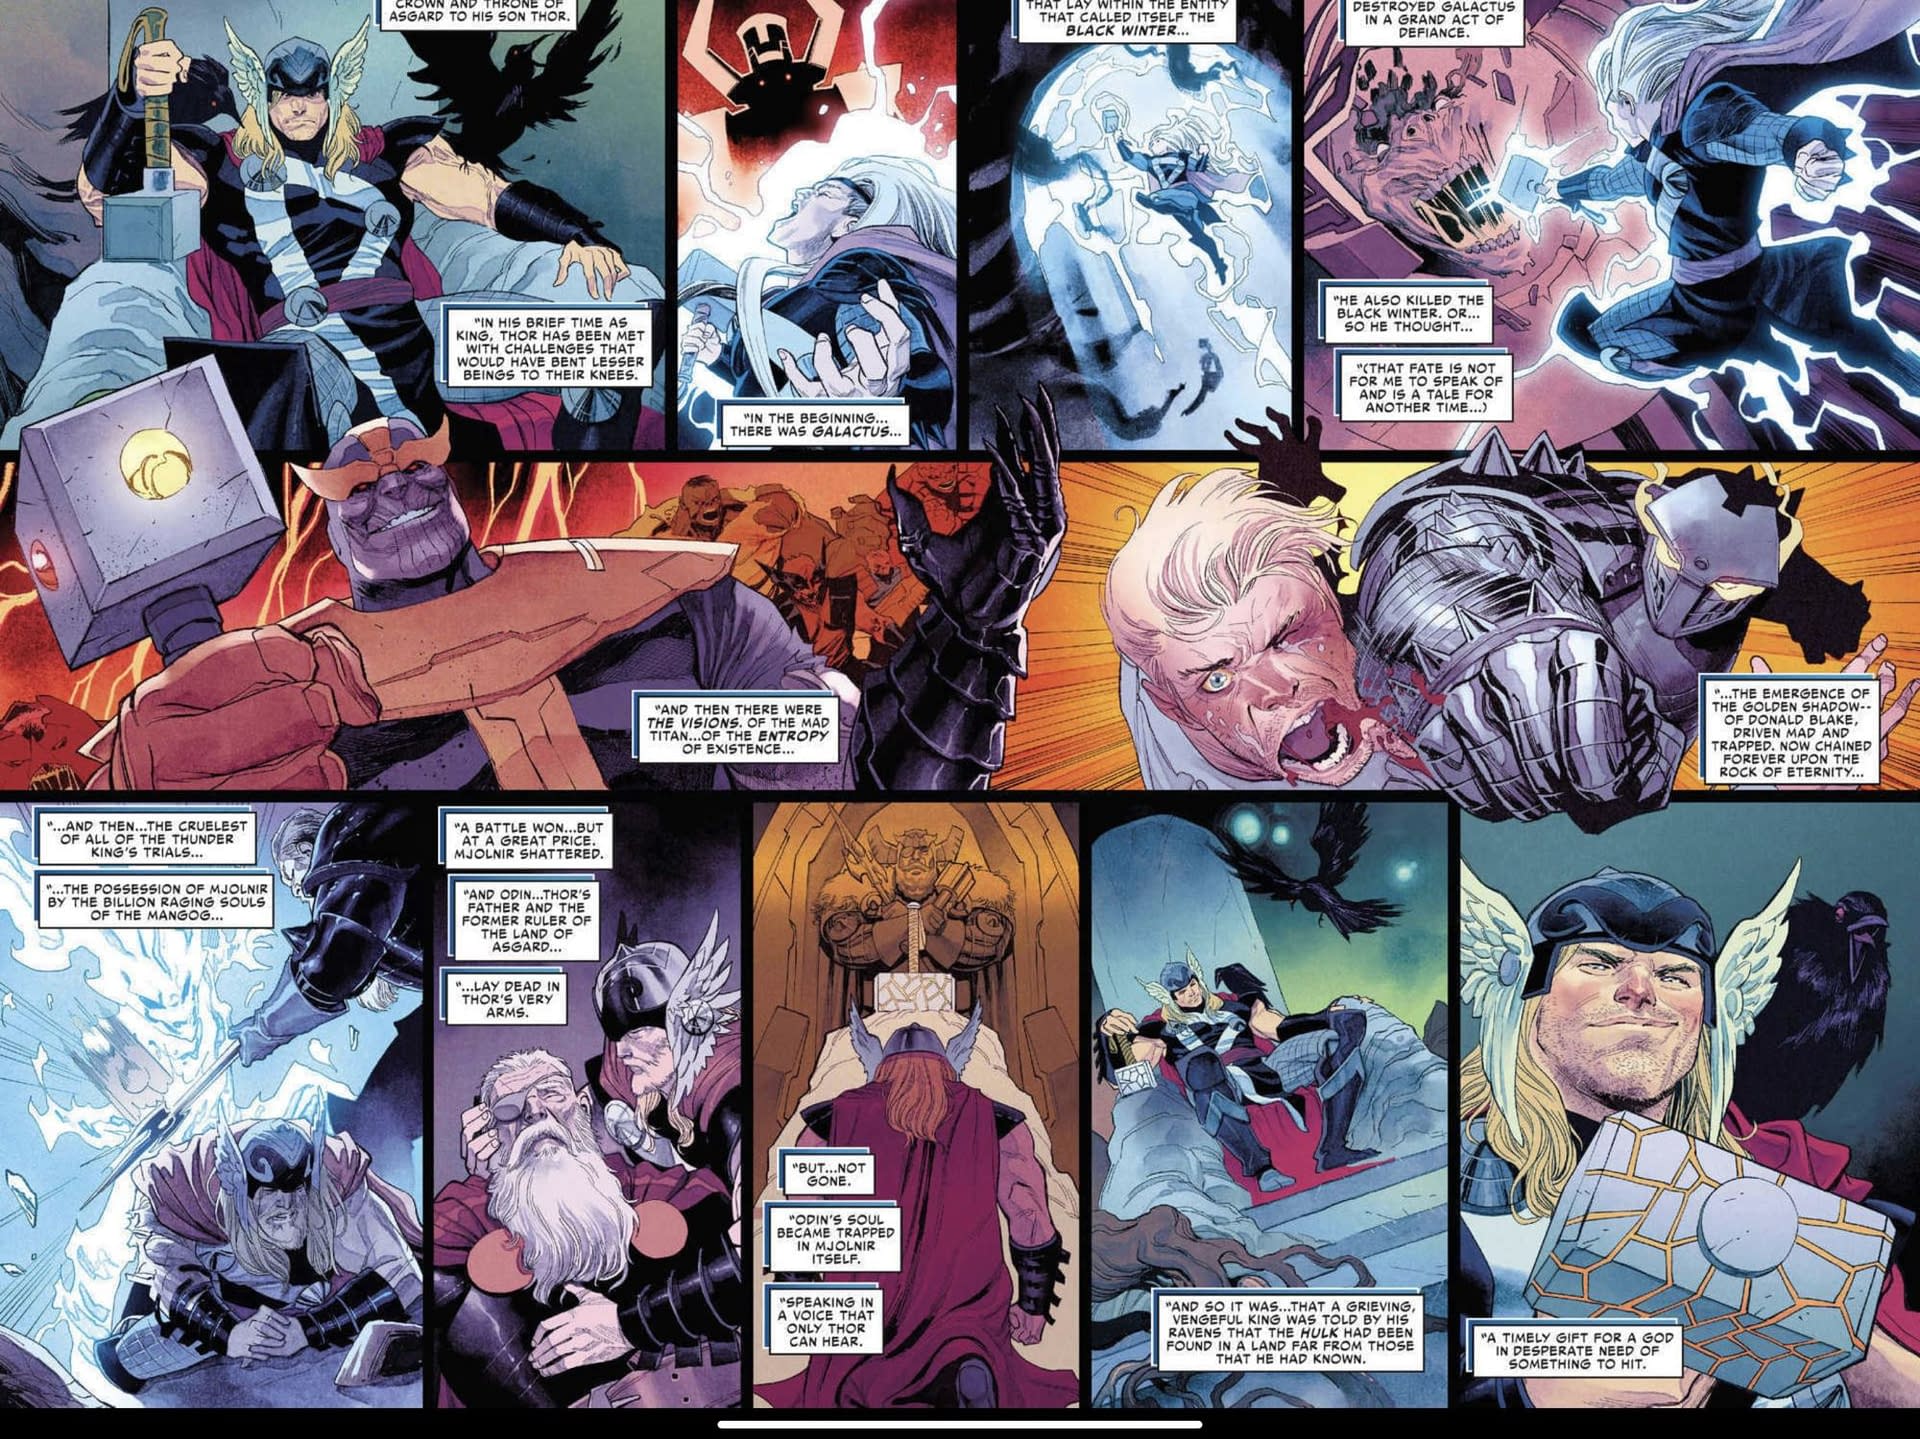 Thor (God of War) vs. Godzilla (Marvel Comics)